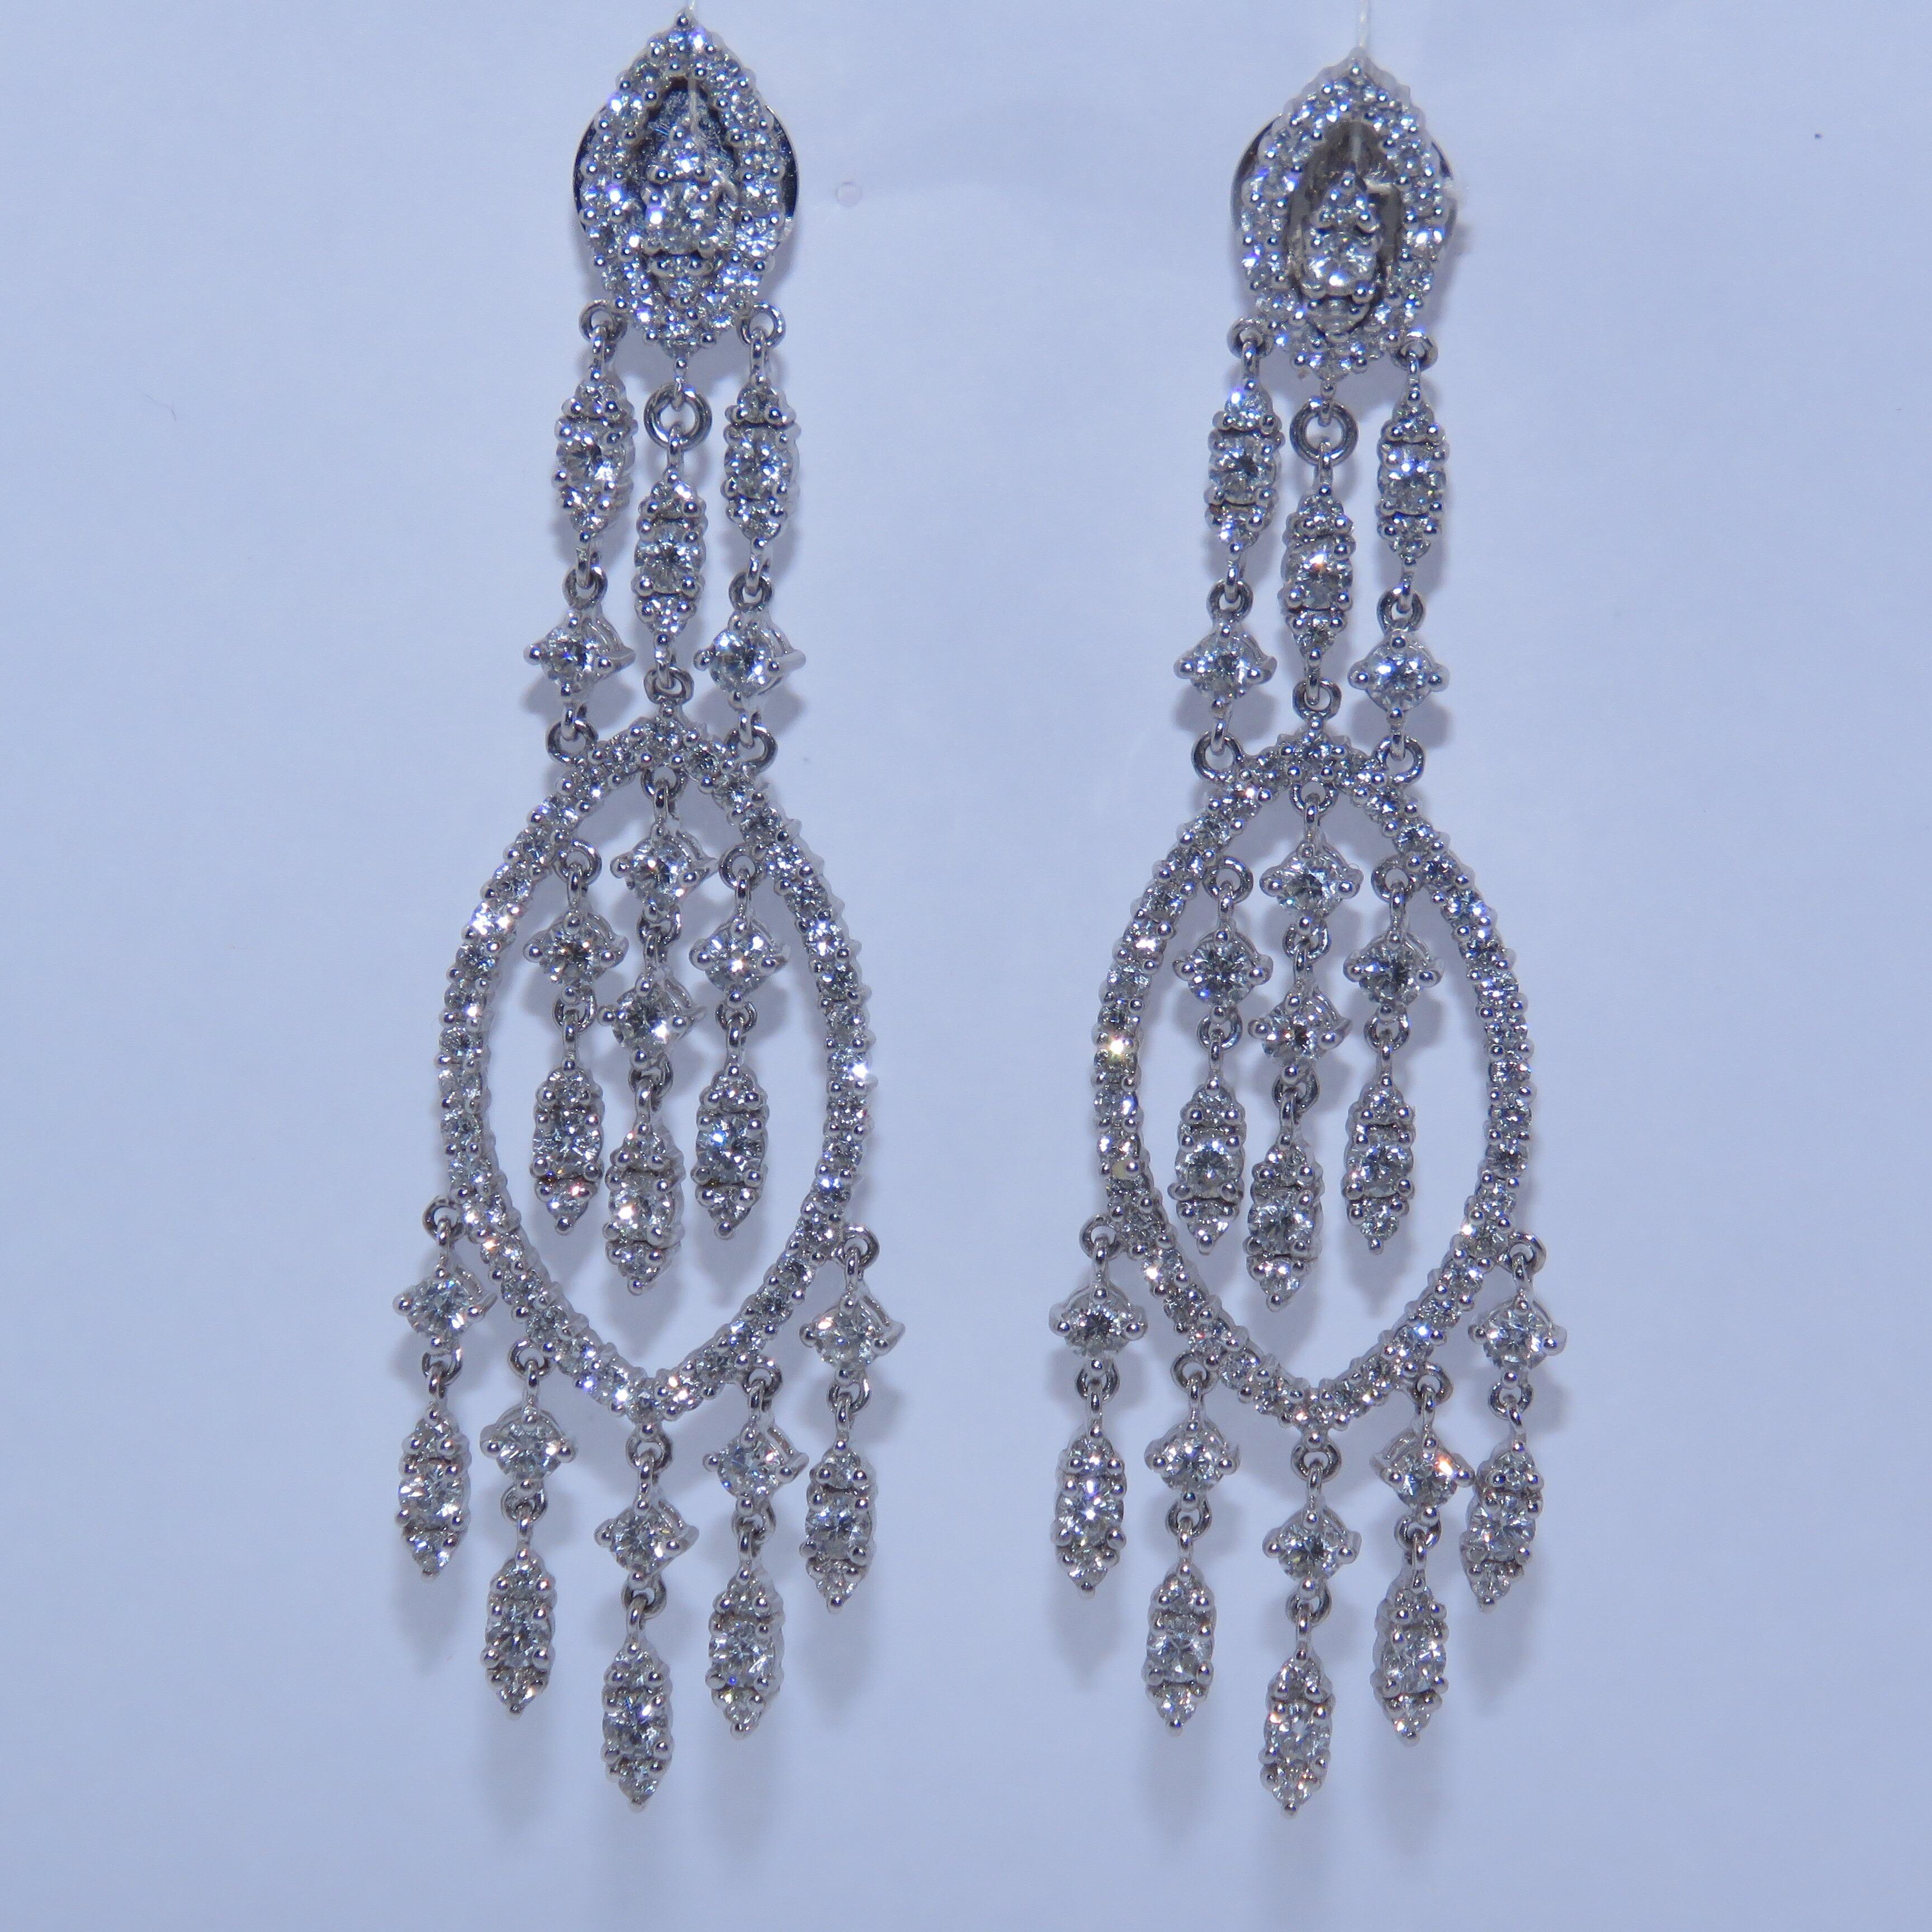 Boucles d'oreilles chandelier en diamant serties en or blanc 18Kt
Diamants 4.73 ct
